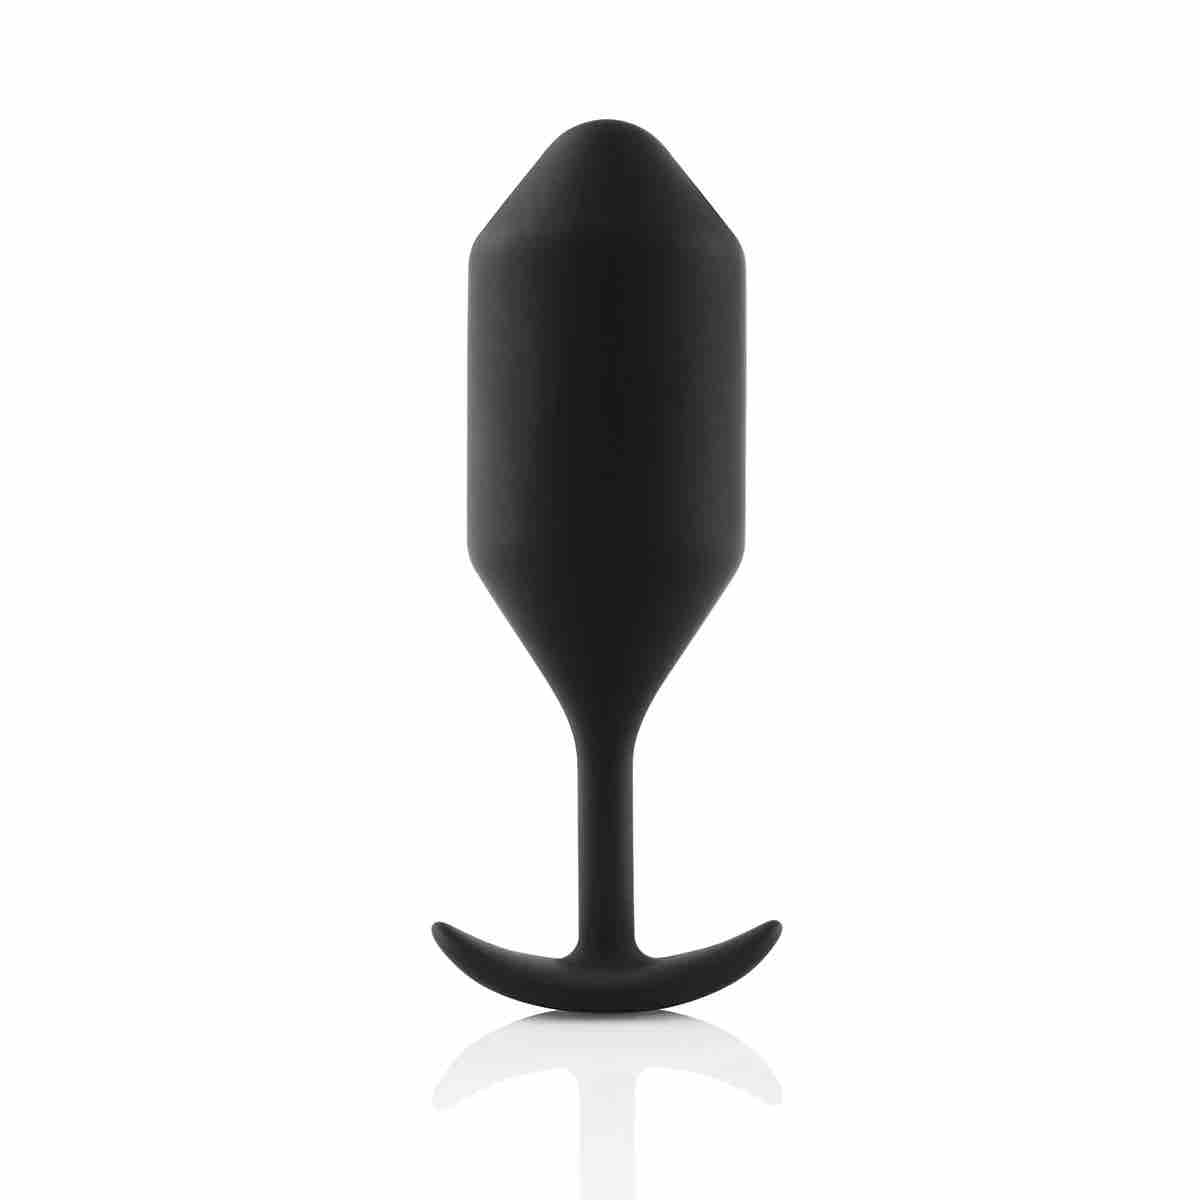 Size 4 black B-Vibe Vibrating Weighted Anal Snug Plug.